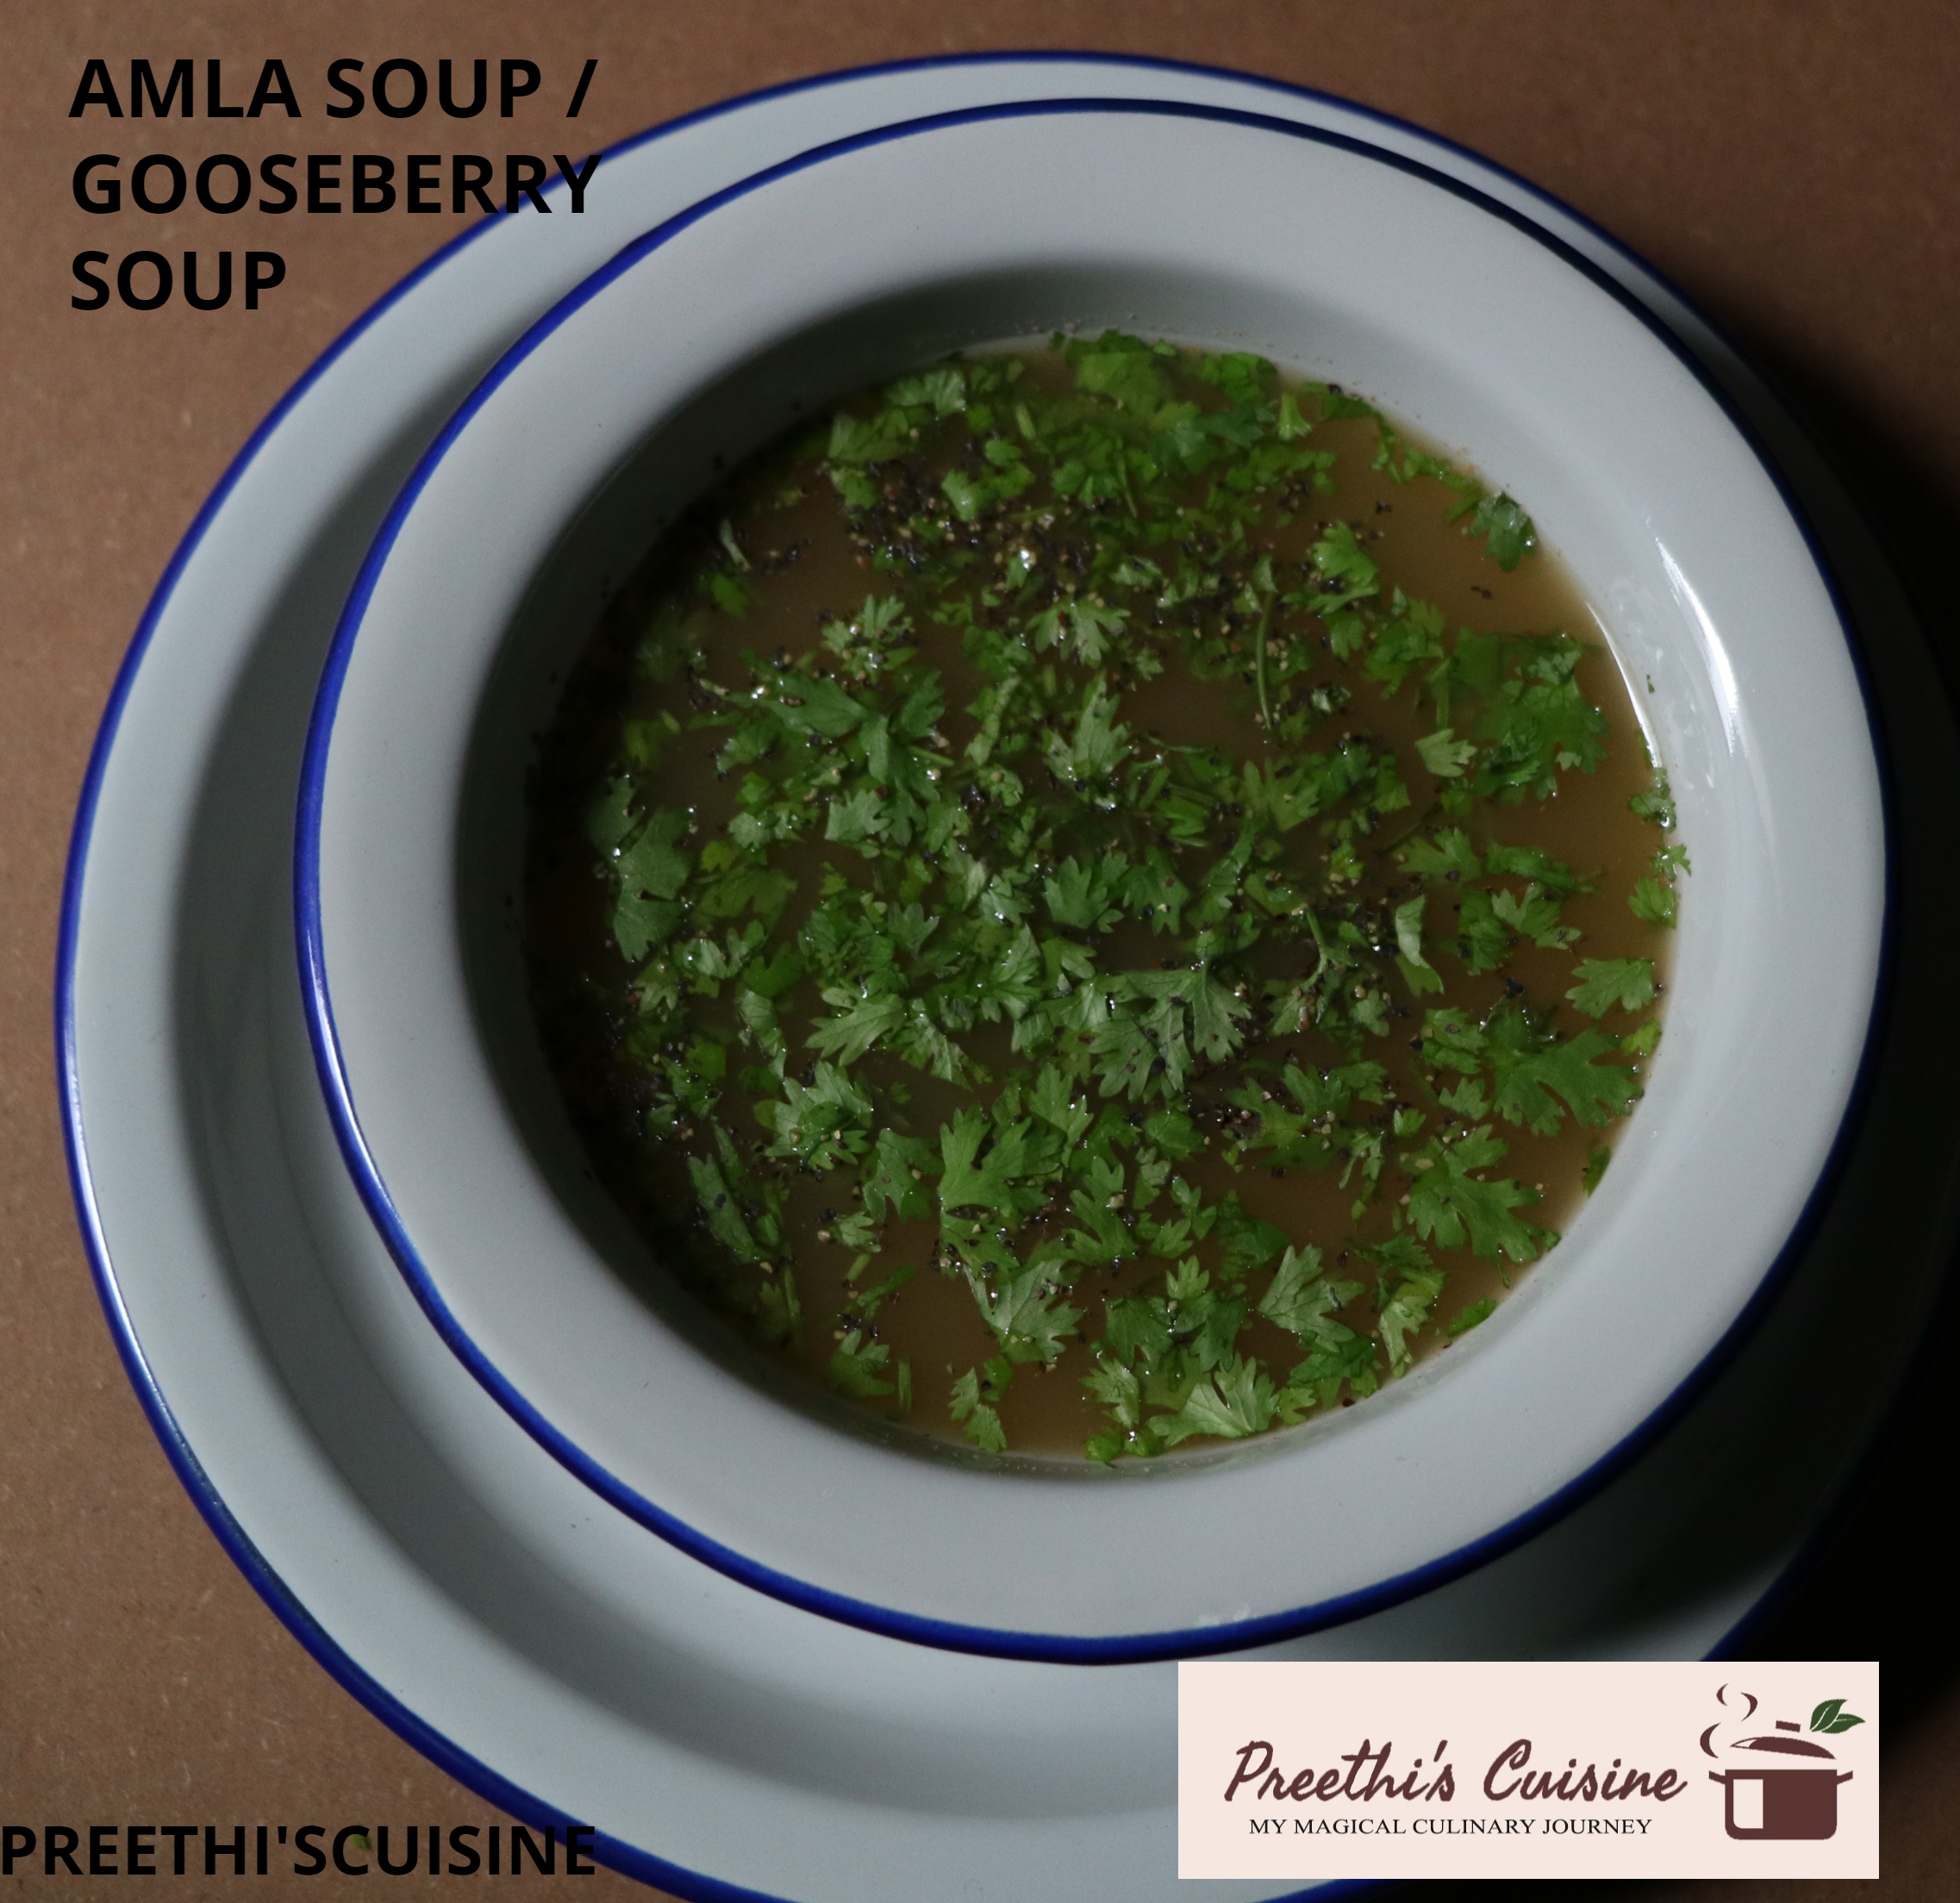 AMLA SOUP / GOOSEBERRY SOUP